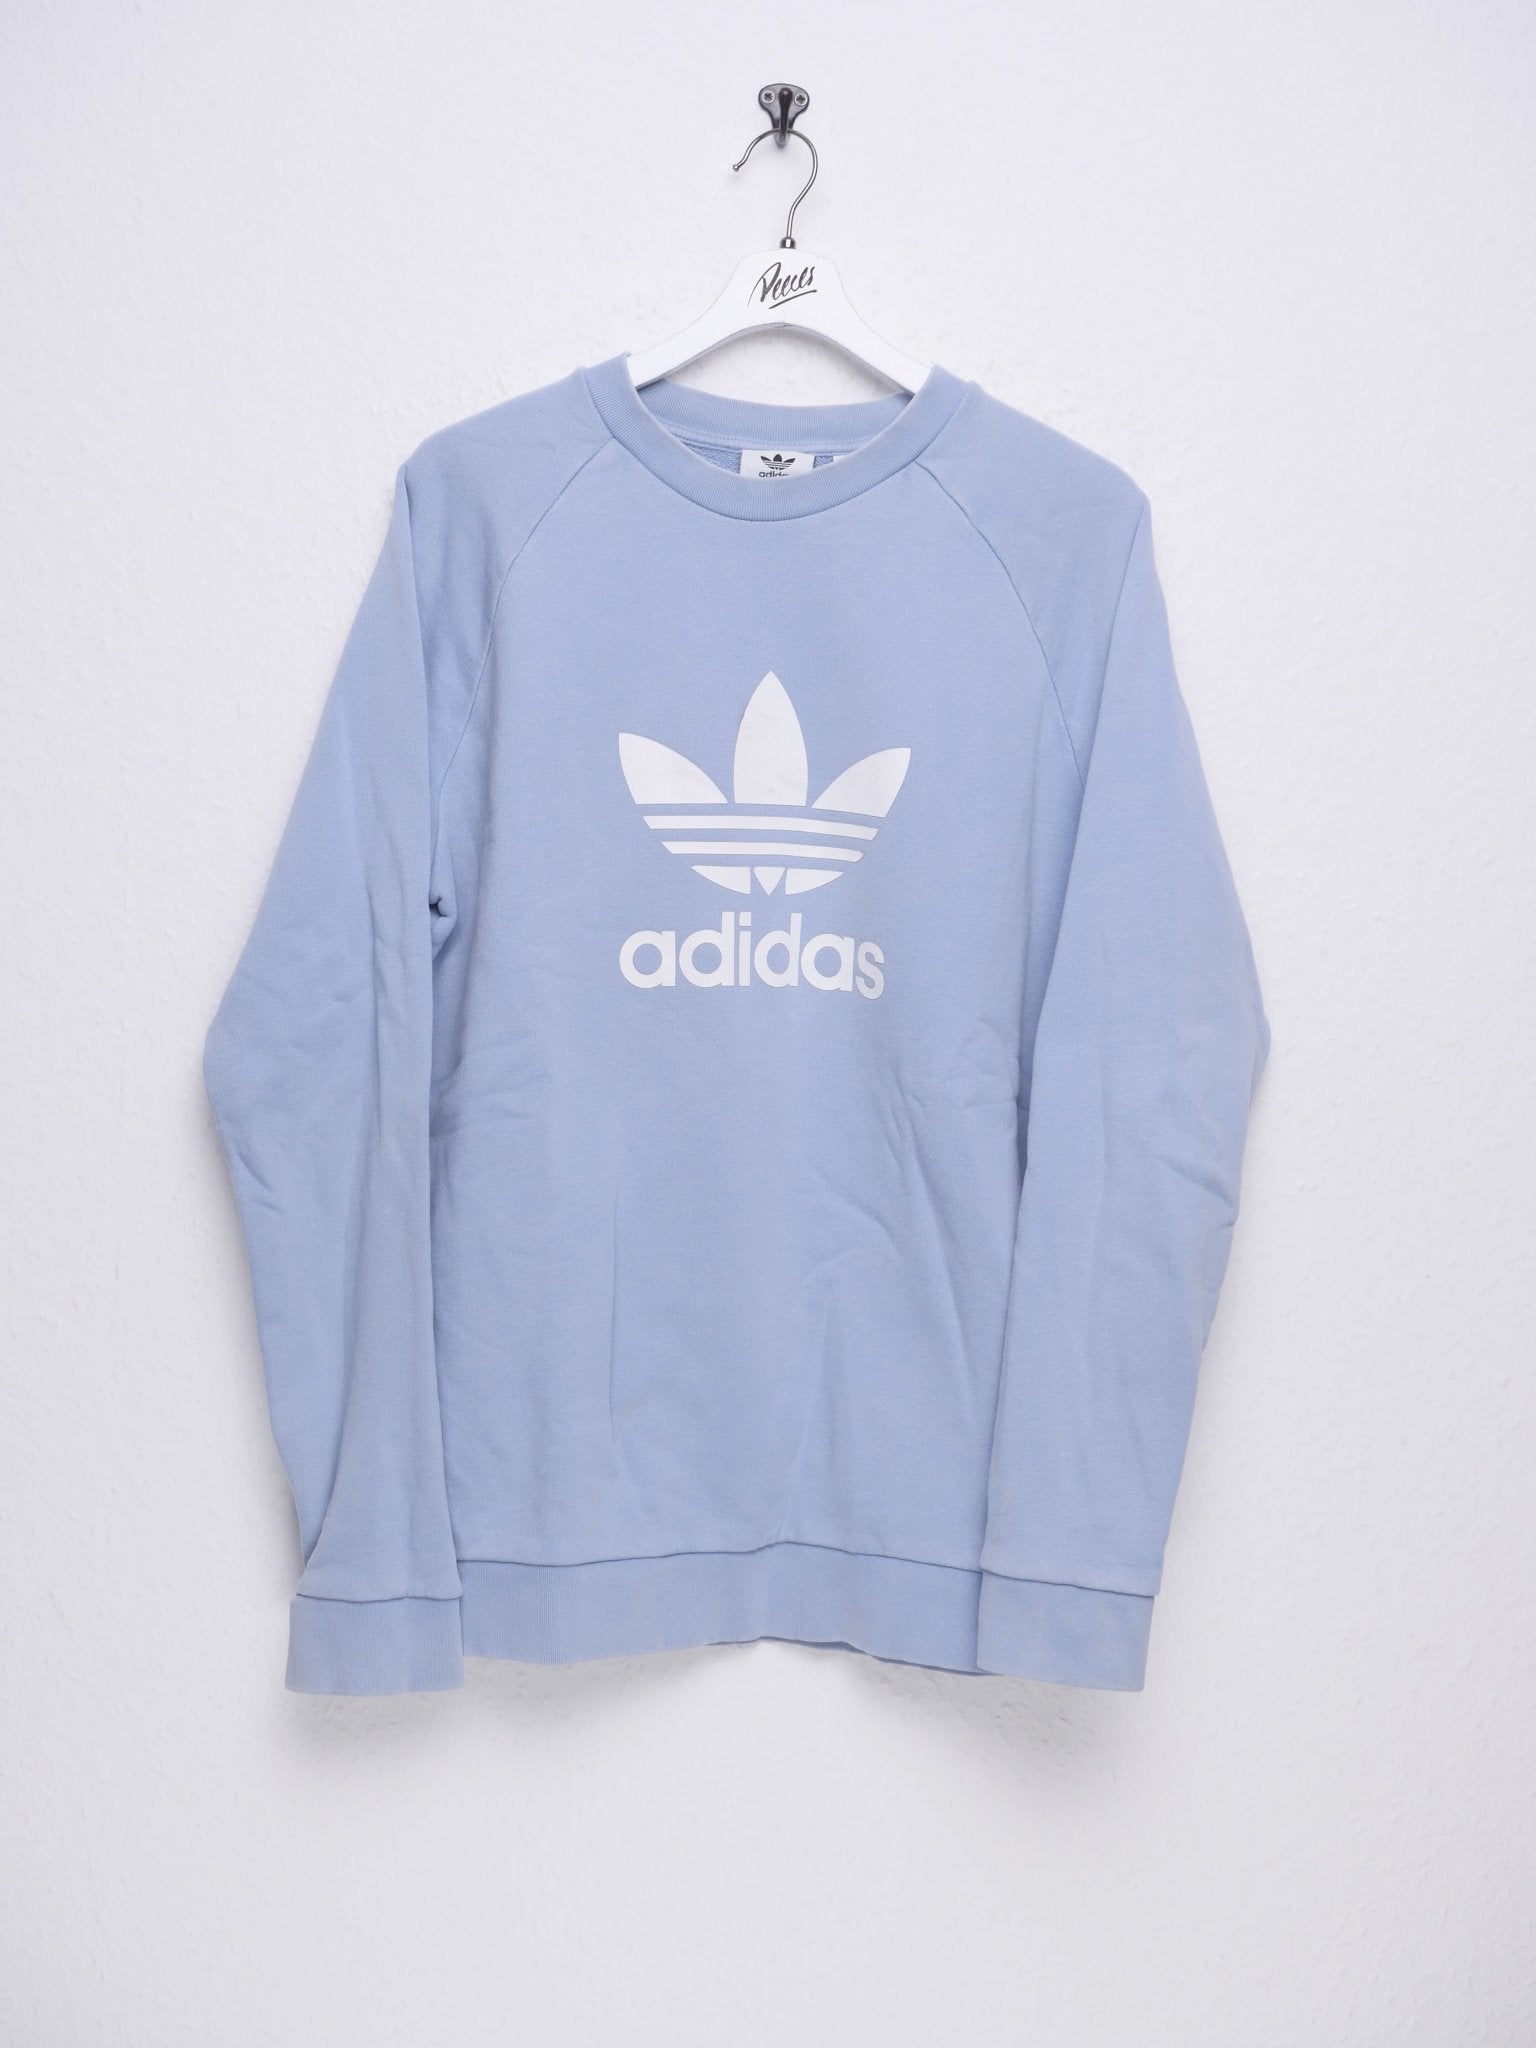 Adidas printed Logo babyblue Sweater - Peeces